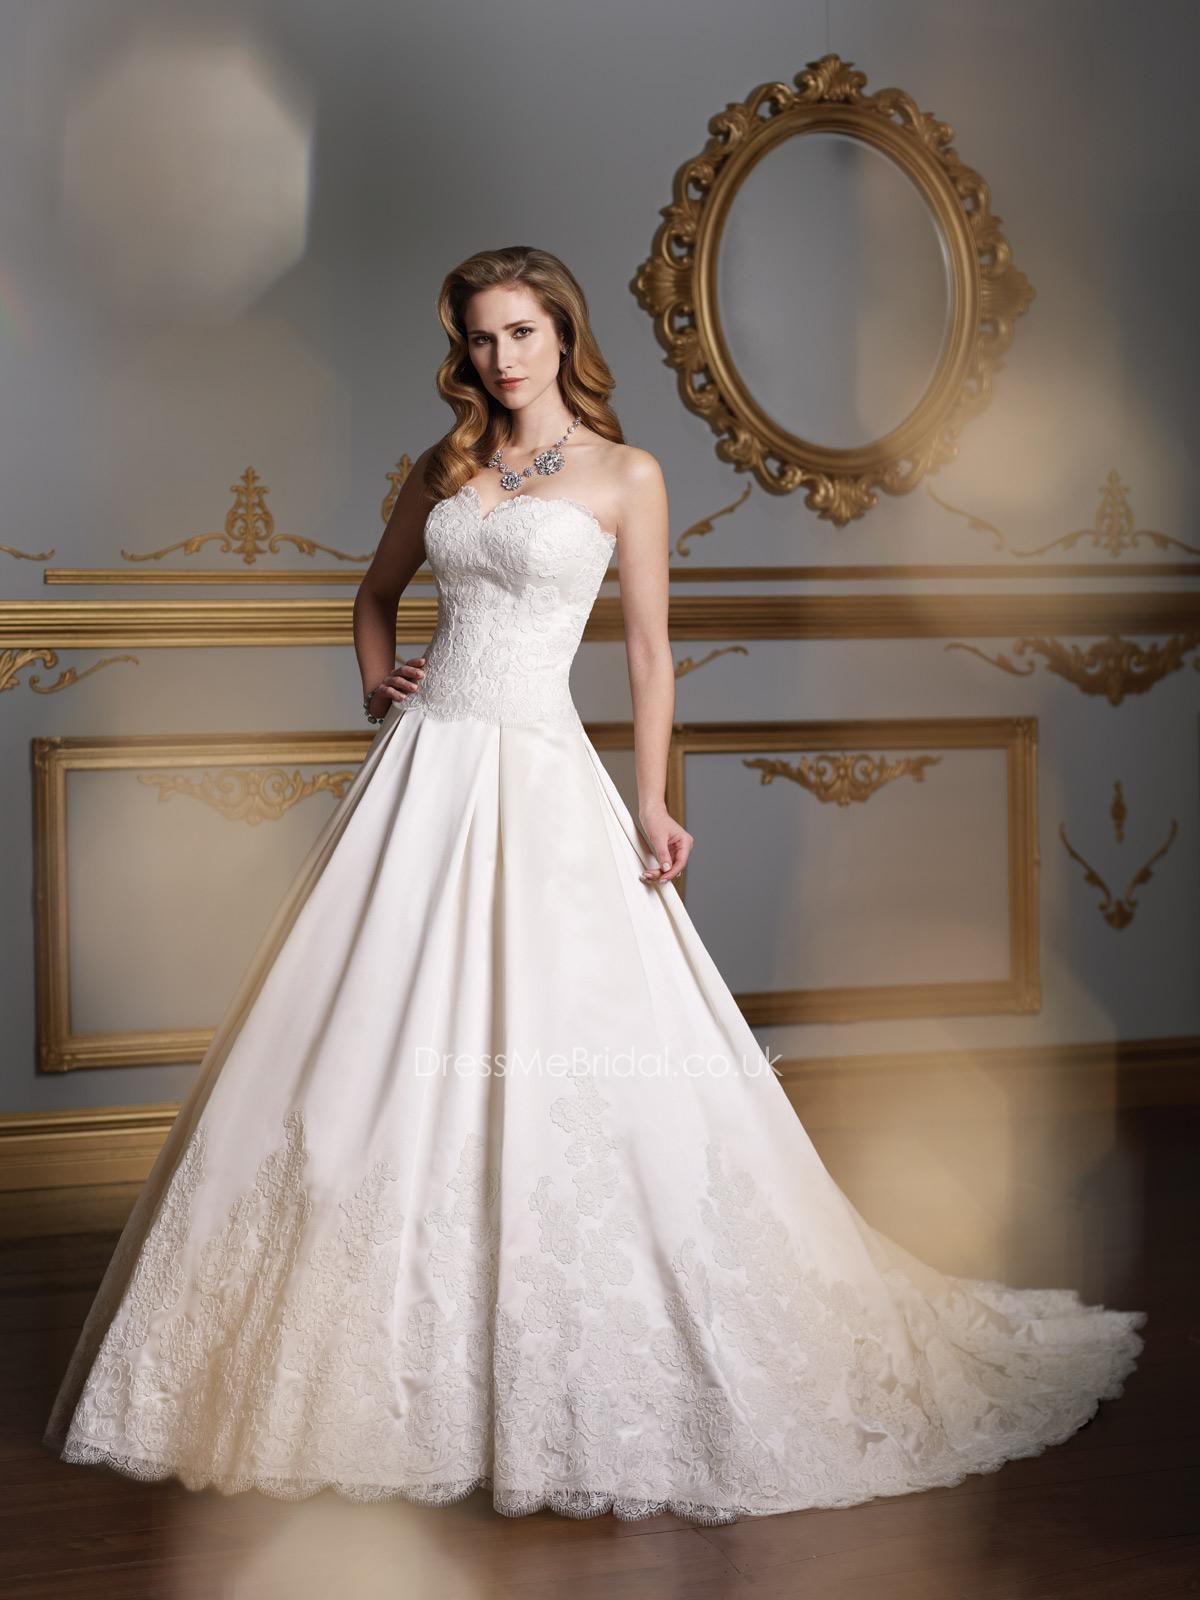 27+ Great Photo of Wedding Dress Patterns To Sew - figswoodfiredbistro.com